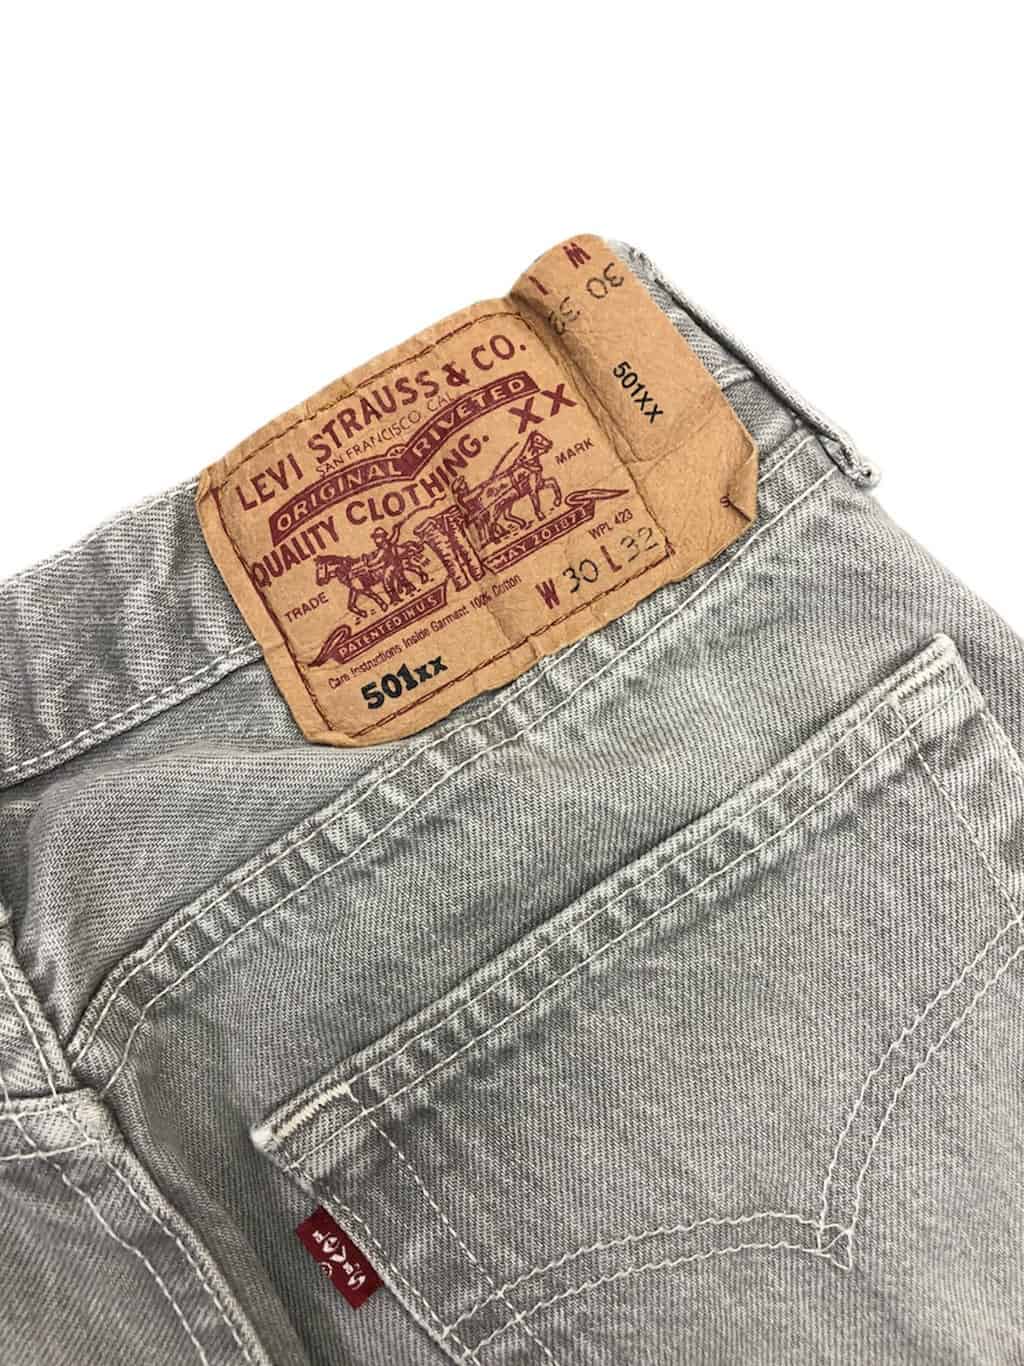 1990s vintage rare Levis 501xx jeans in light grey denim - W28 x L30 - St  Cyr Vintage